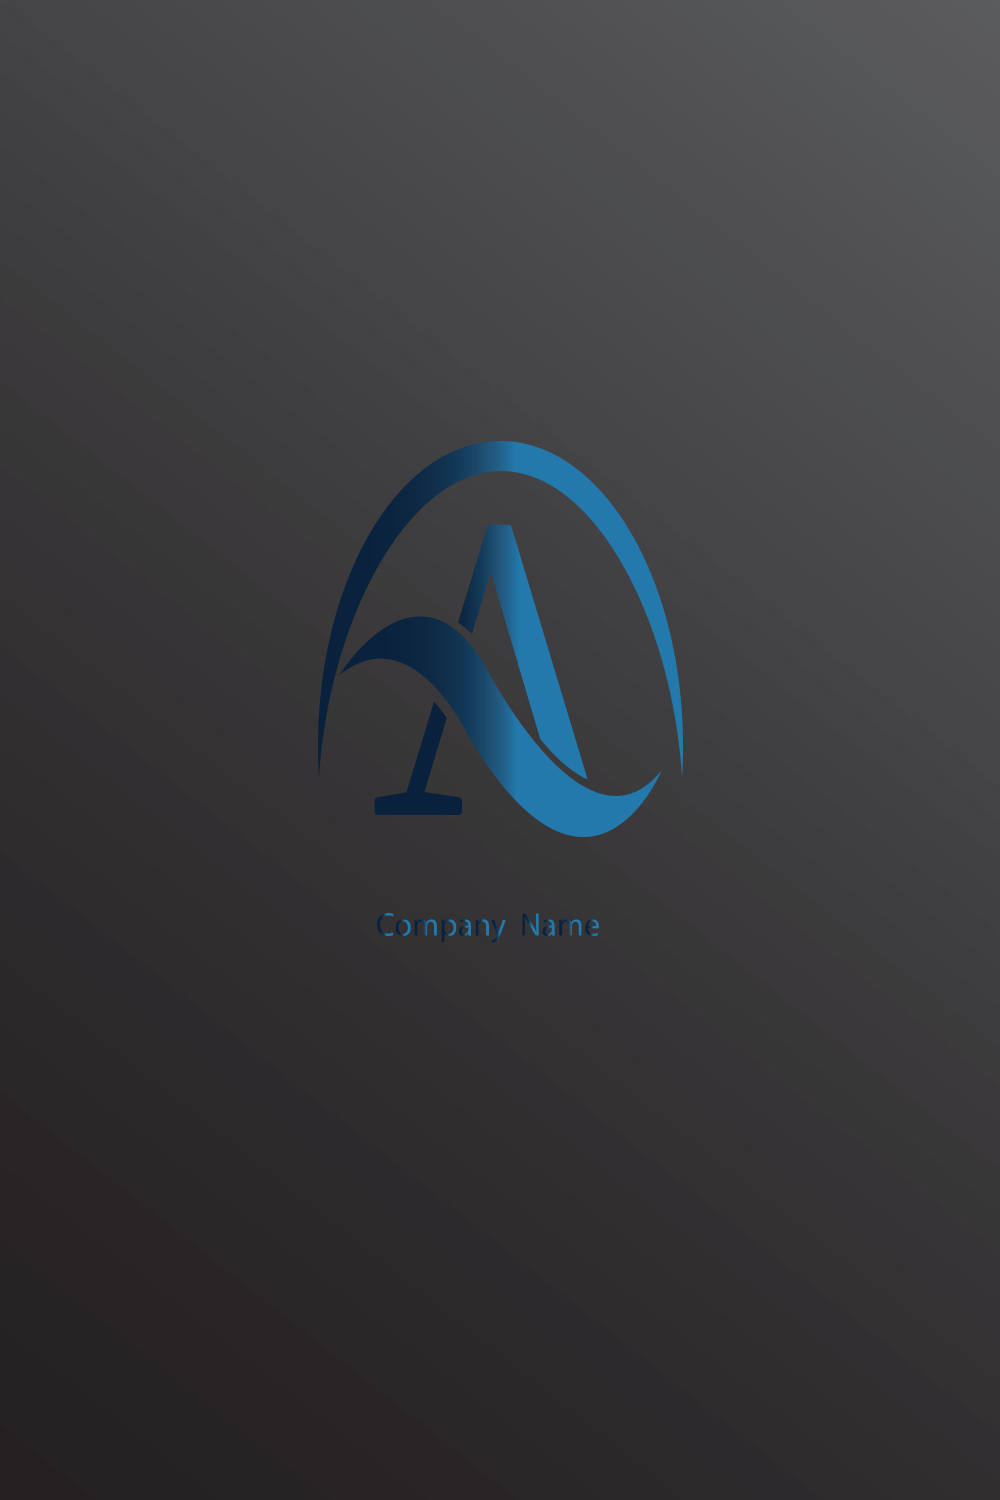 A Letter logo design pinterest preview image.